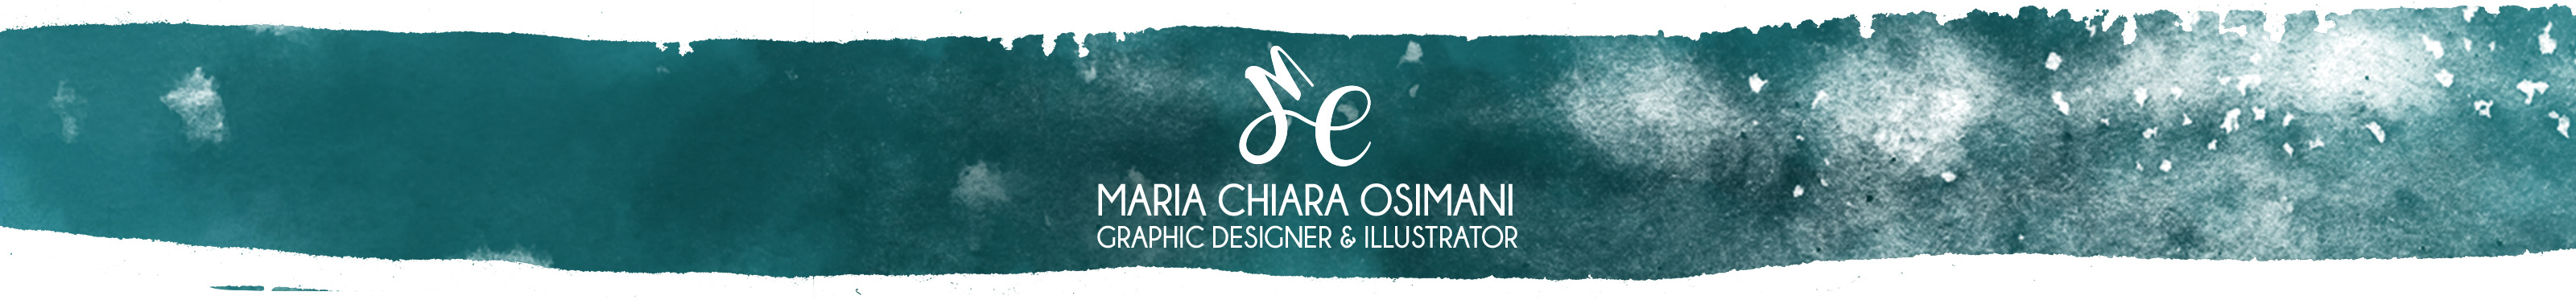 Maria Chiara Osimani's profile banner